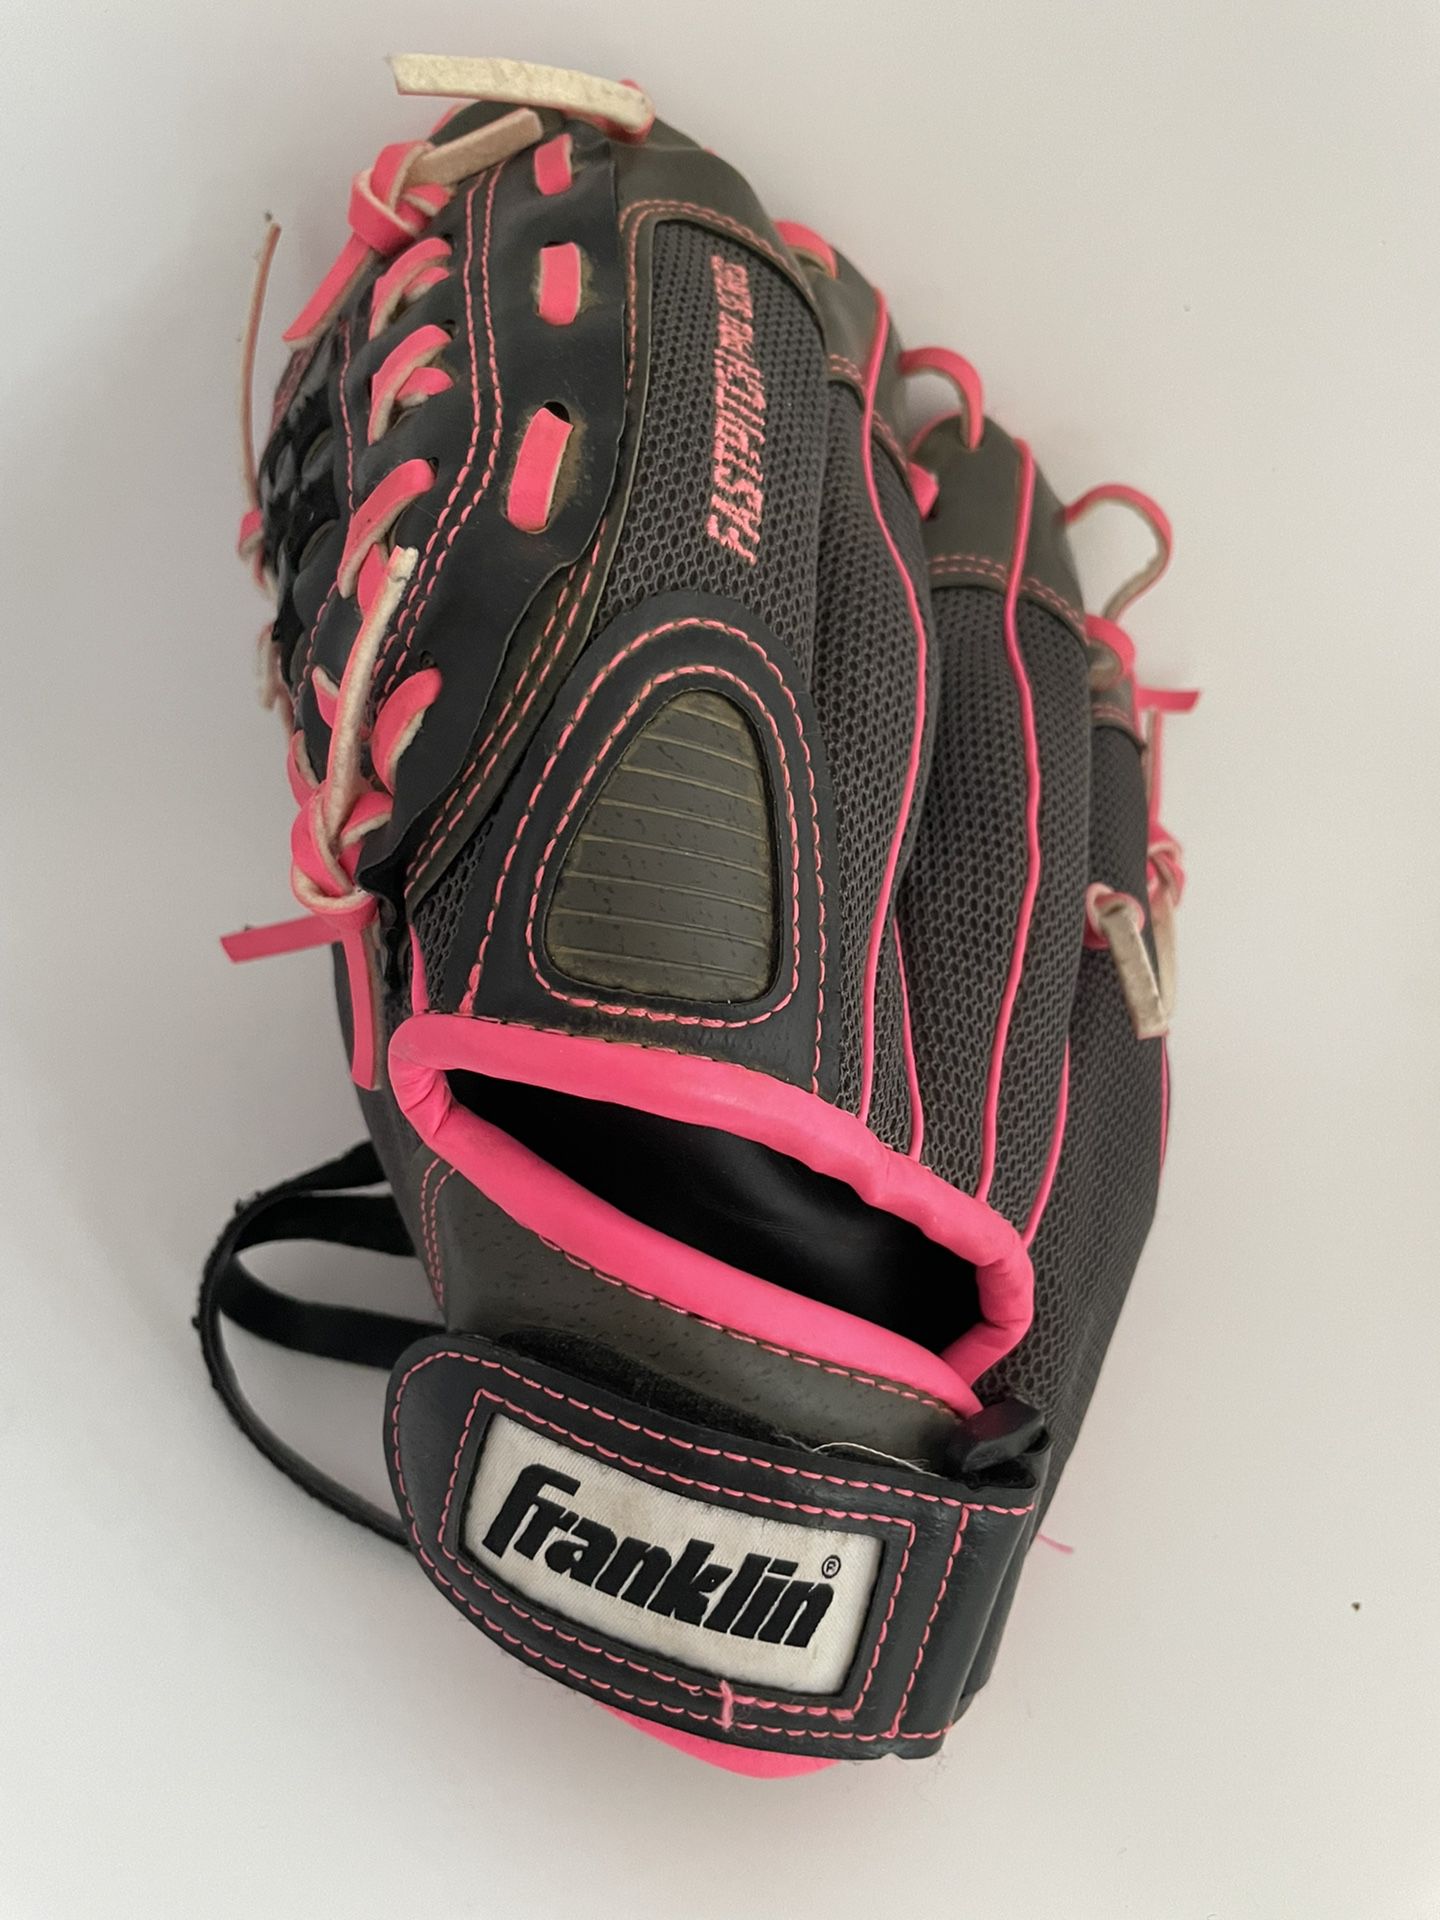 Franklin Fast Pitch Pro 22320 Softball Baseball Glove 11” LHT Deer Pink Black